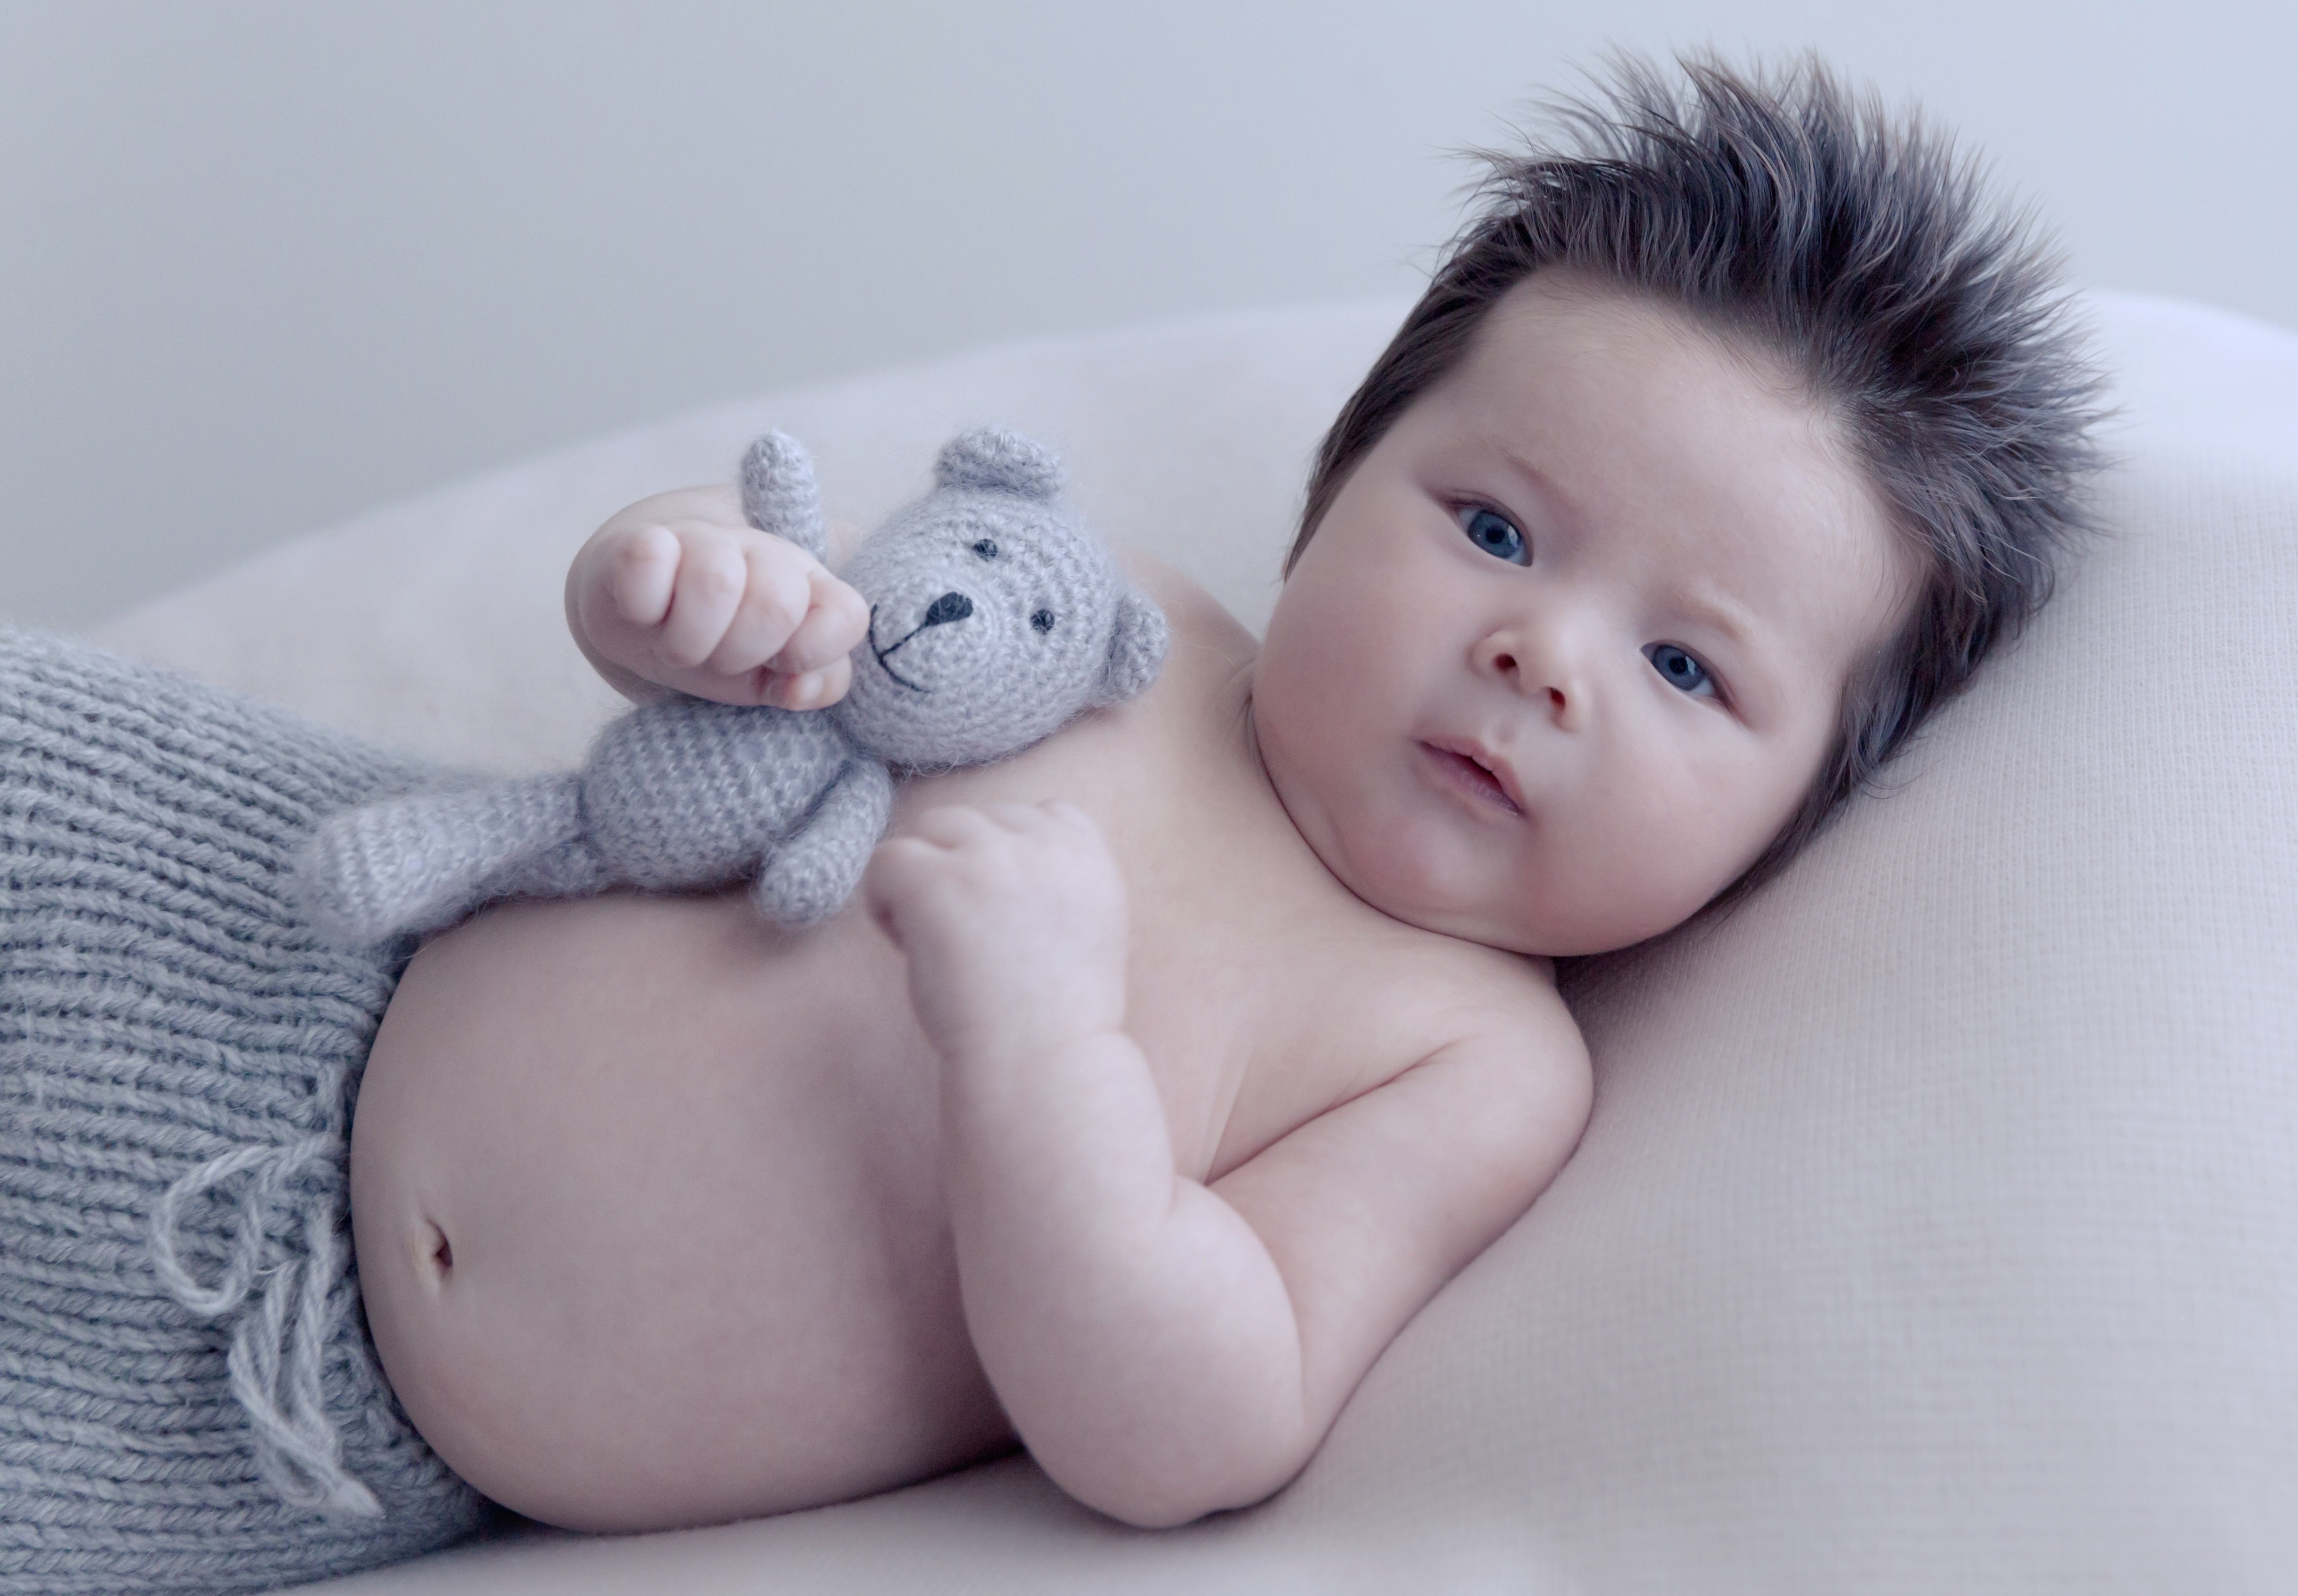 Baby With Teddy Bear Wallpaper - High Key Skin Photography - HD Wallpaper 